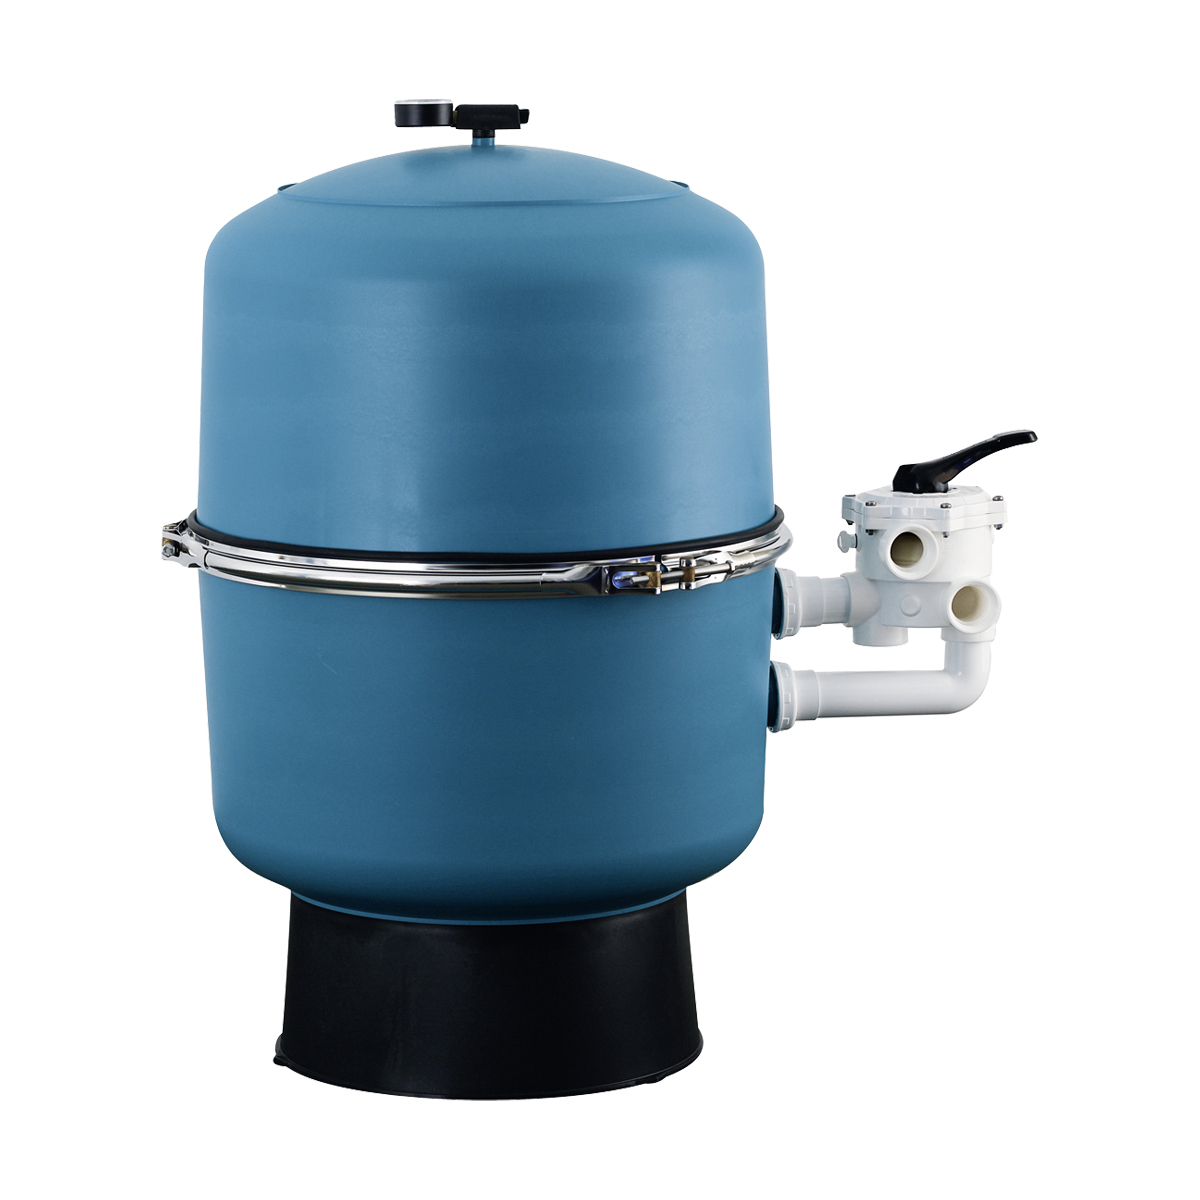 Filter GRAZ d360 blue, side mount with original Praher 1 1/2" 6 way valve, manual Filter GRAZ d360 blue, side mount with original Praher 1 1/2" 6 way valve, manual